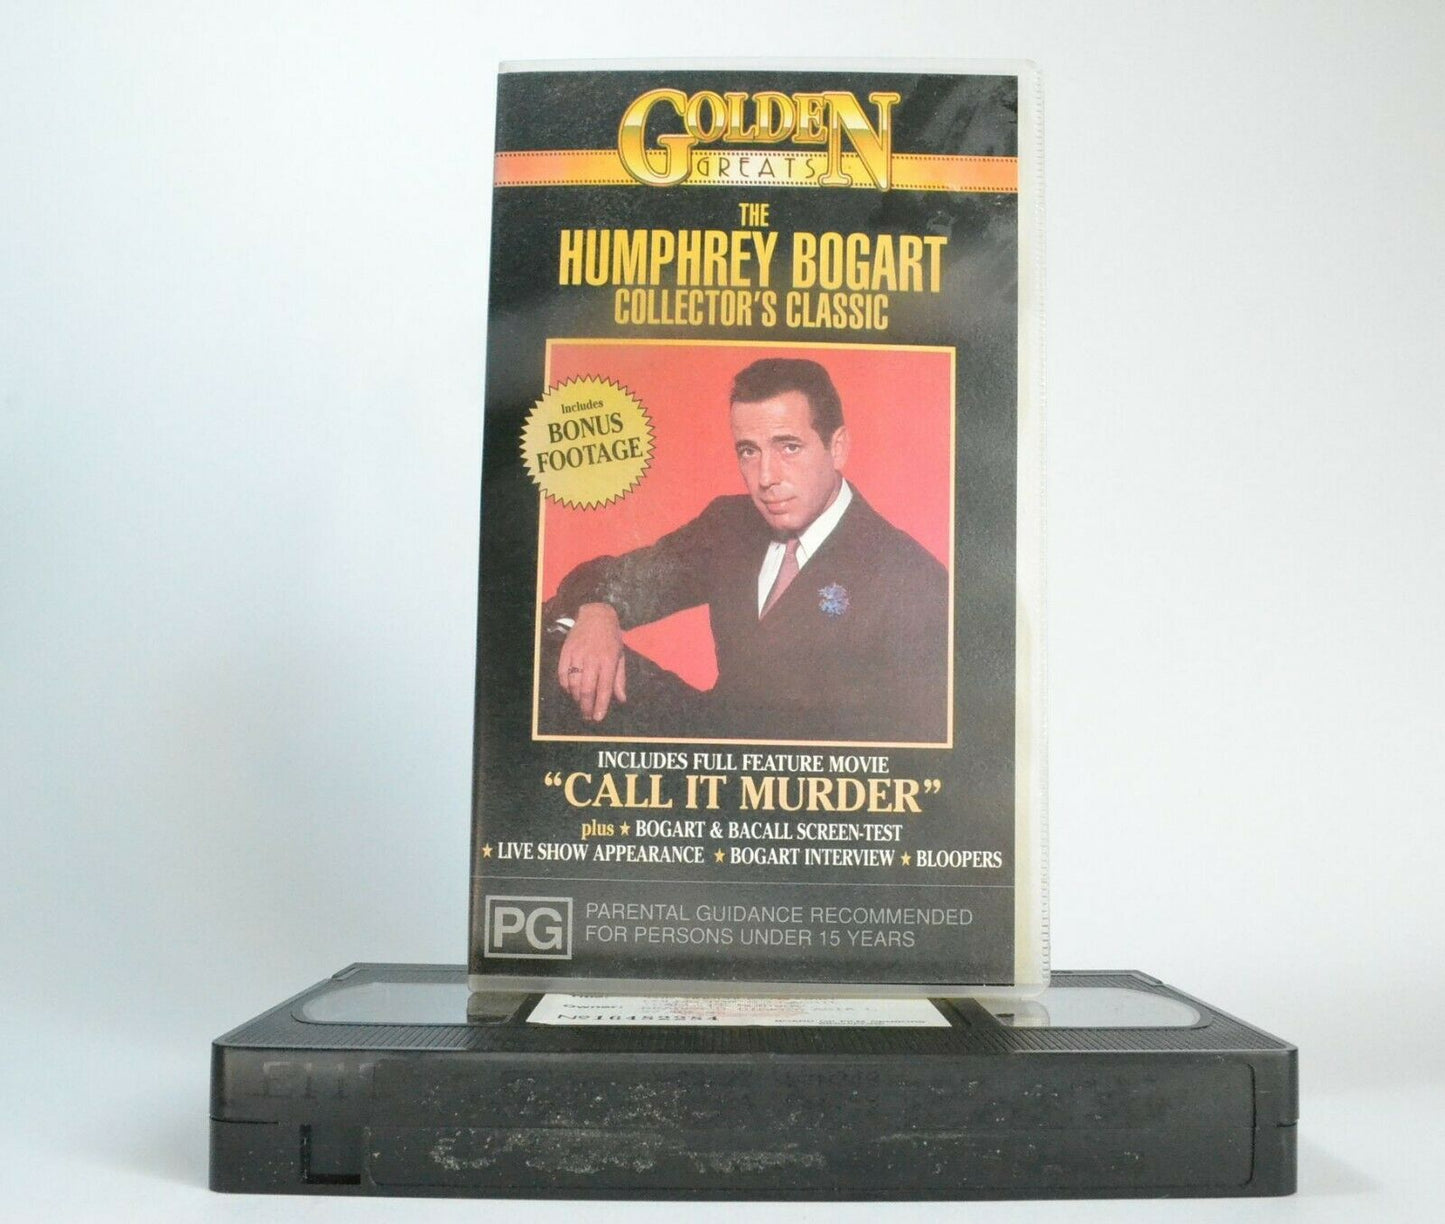 Call It Murder [Humphrey Bogart Collector's Classic] Bloopers - Interview - VHS-